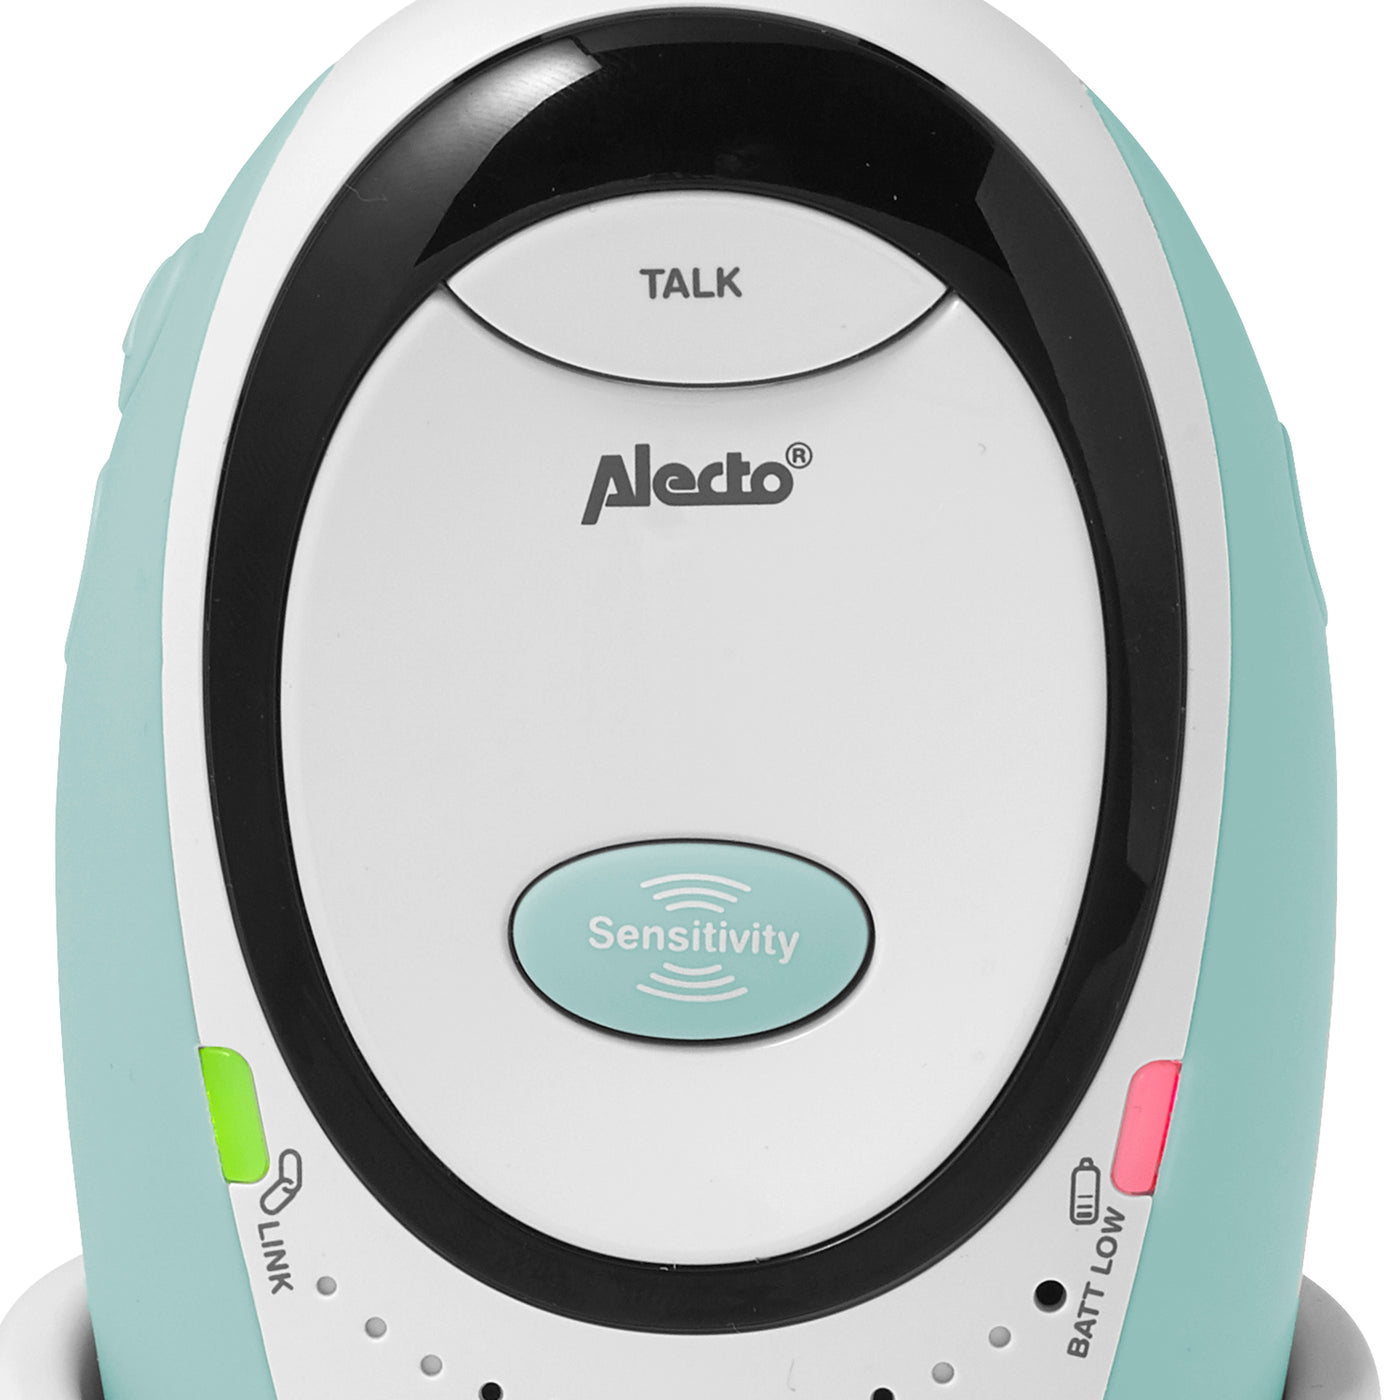 Alecto DBX-85MT - DECT Babyphone mit Full ECO-Modus, weiß/Minzgrün